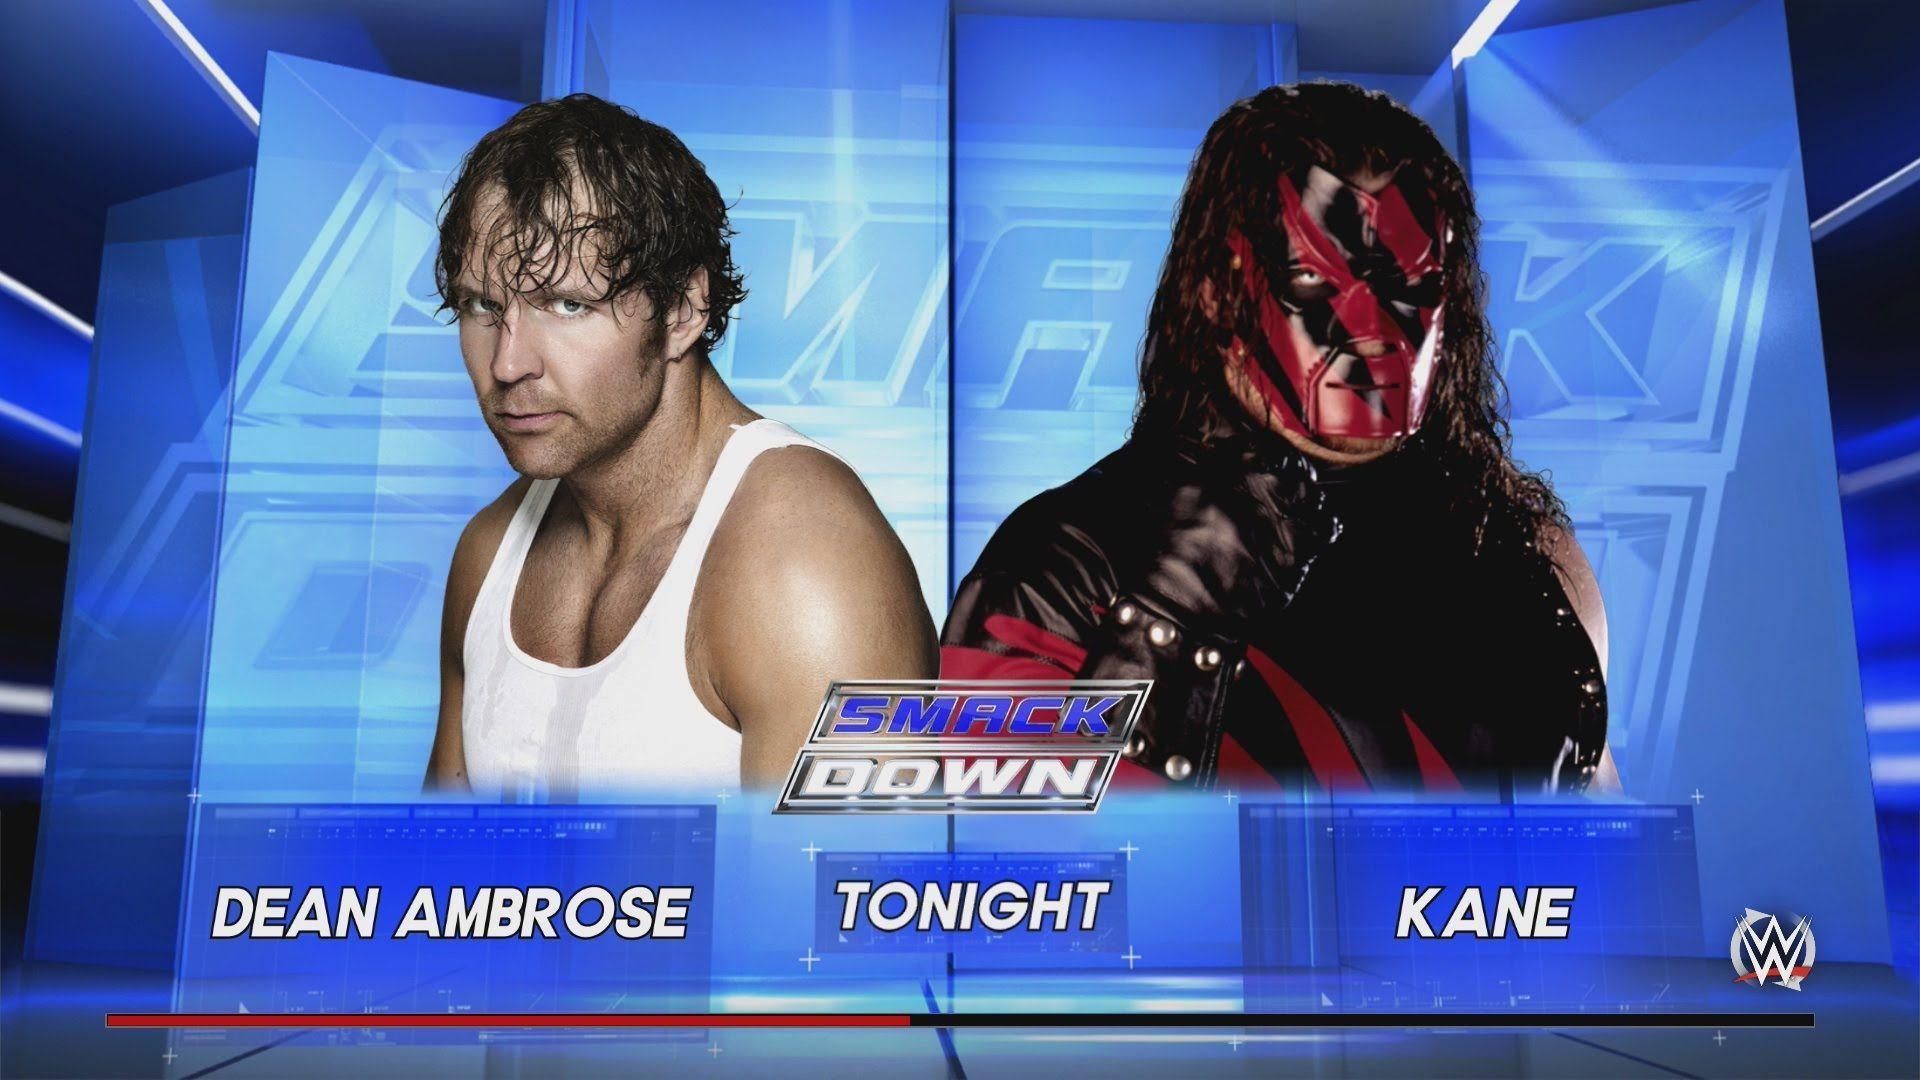 Dean Ambrose vs Kane SmackDown January 2016 WWE 2K16